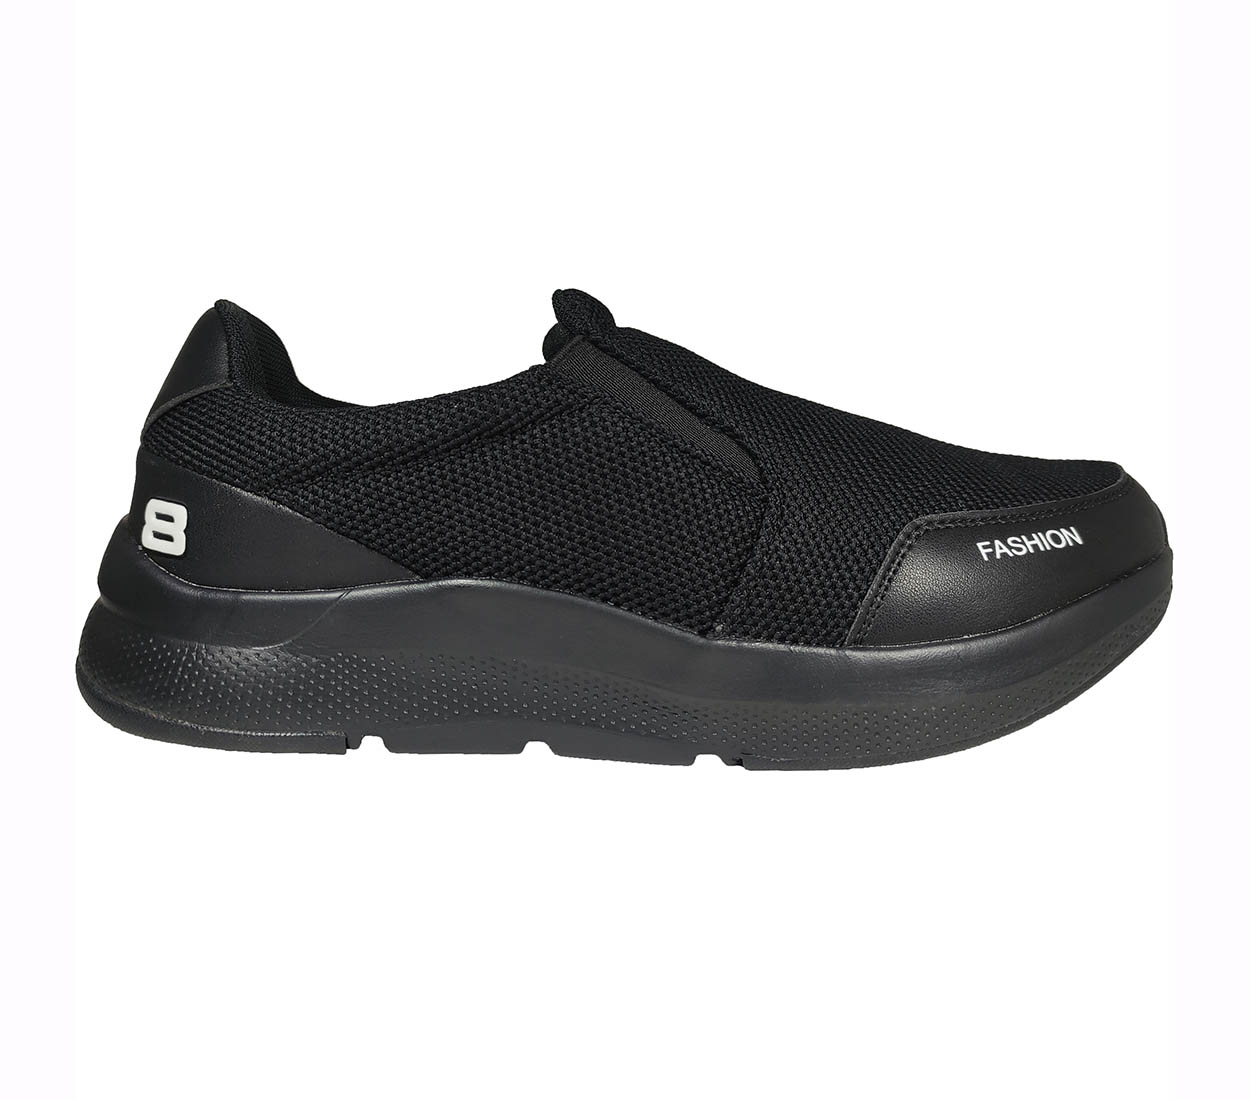 Sports shoes Fashion M23027 Black